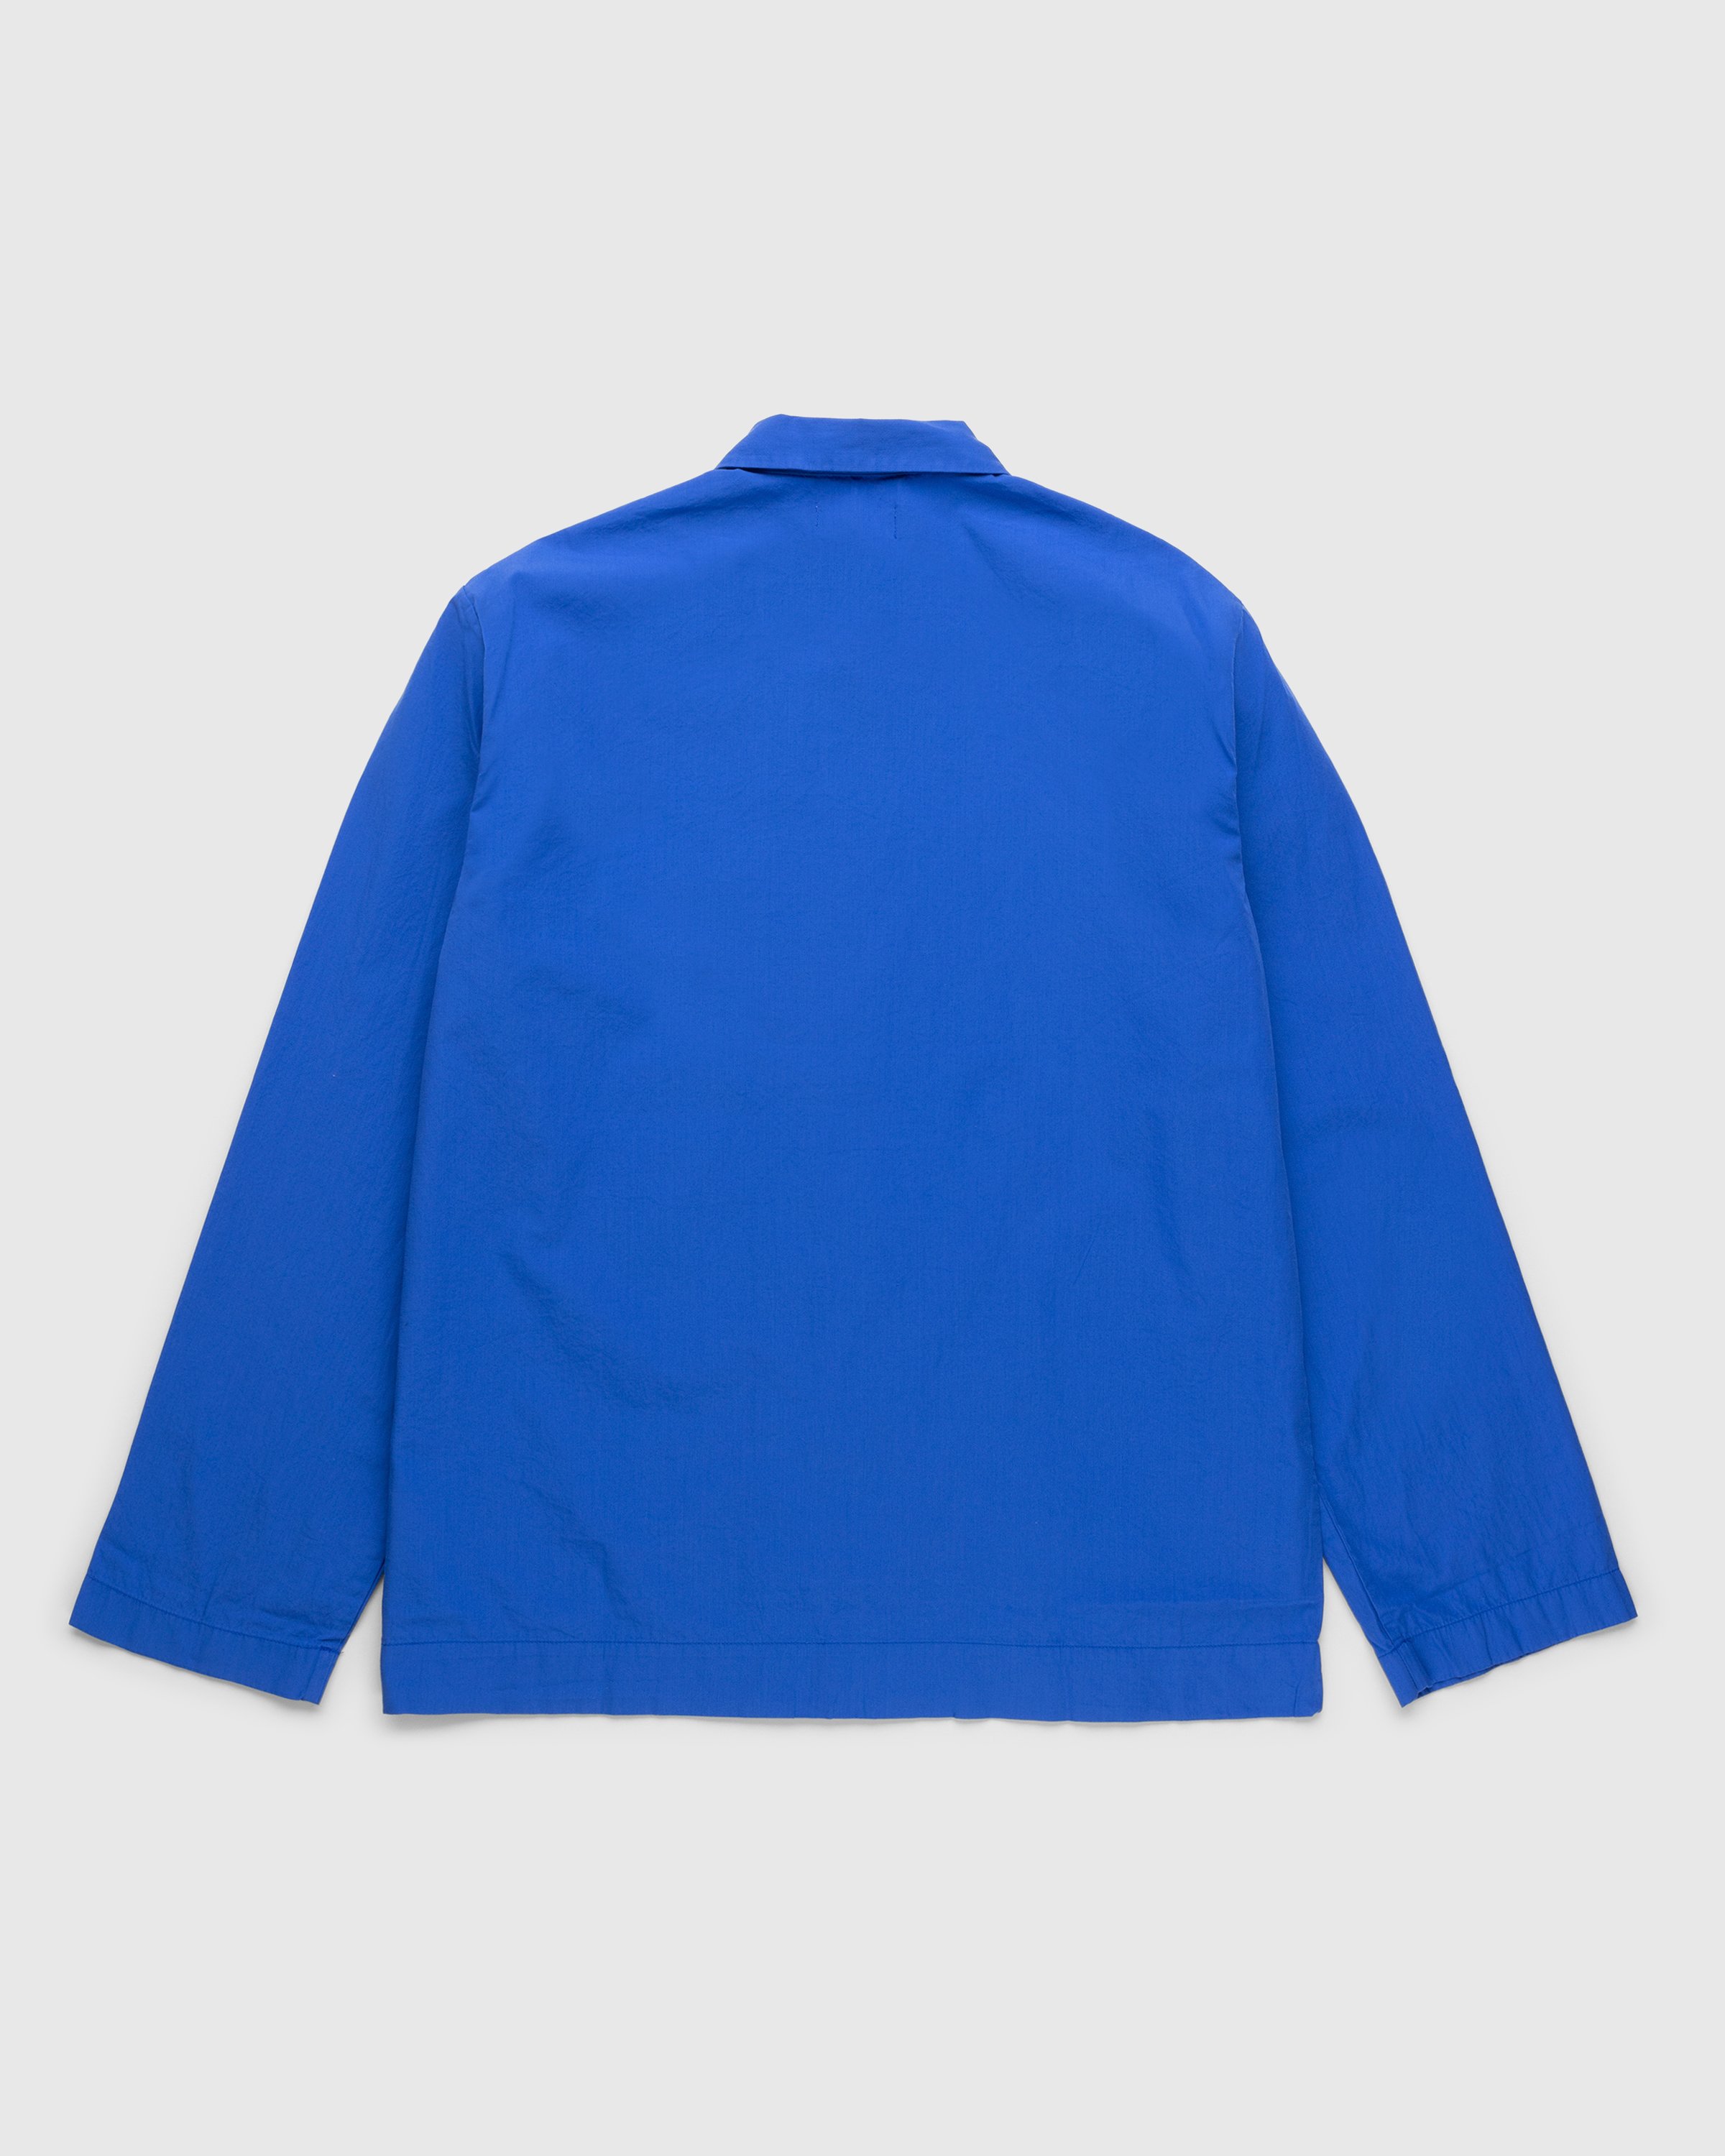 Tekla - Cotton Poplin Pyjamas Shirt Royal Blue - Clothing - Blue - Image 2